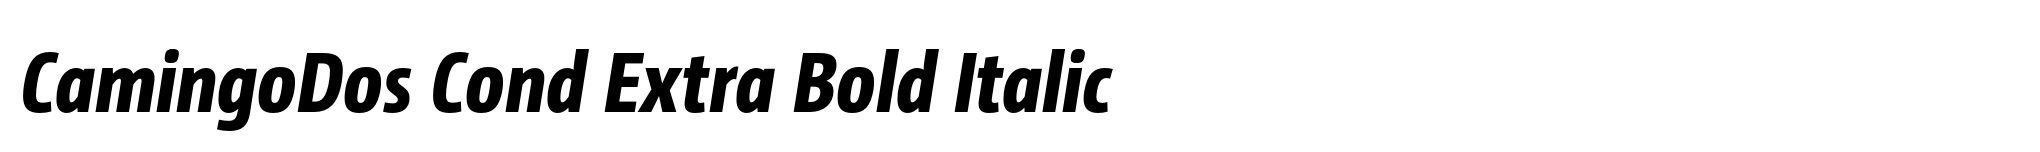 CamingoDos Cond Extra Bold Italic image